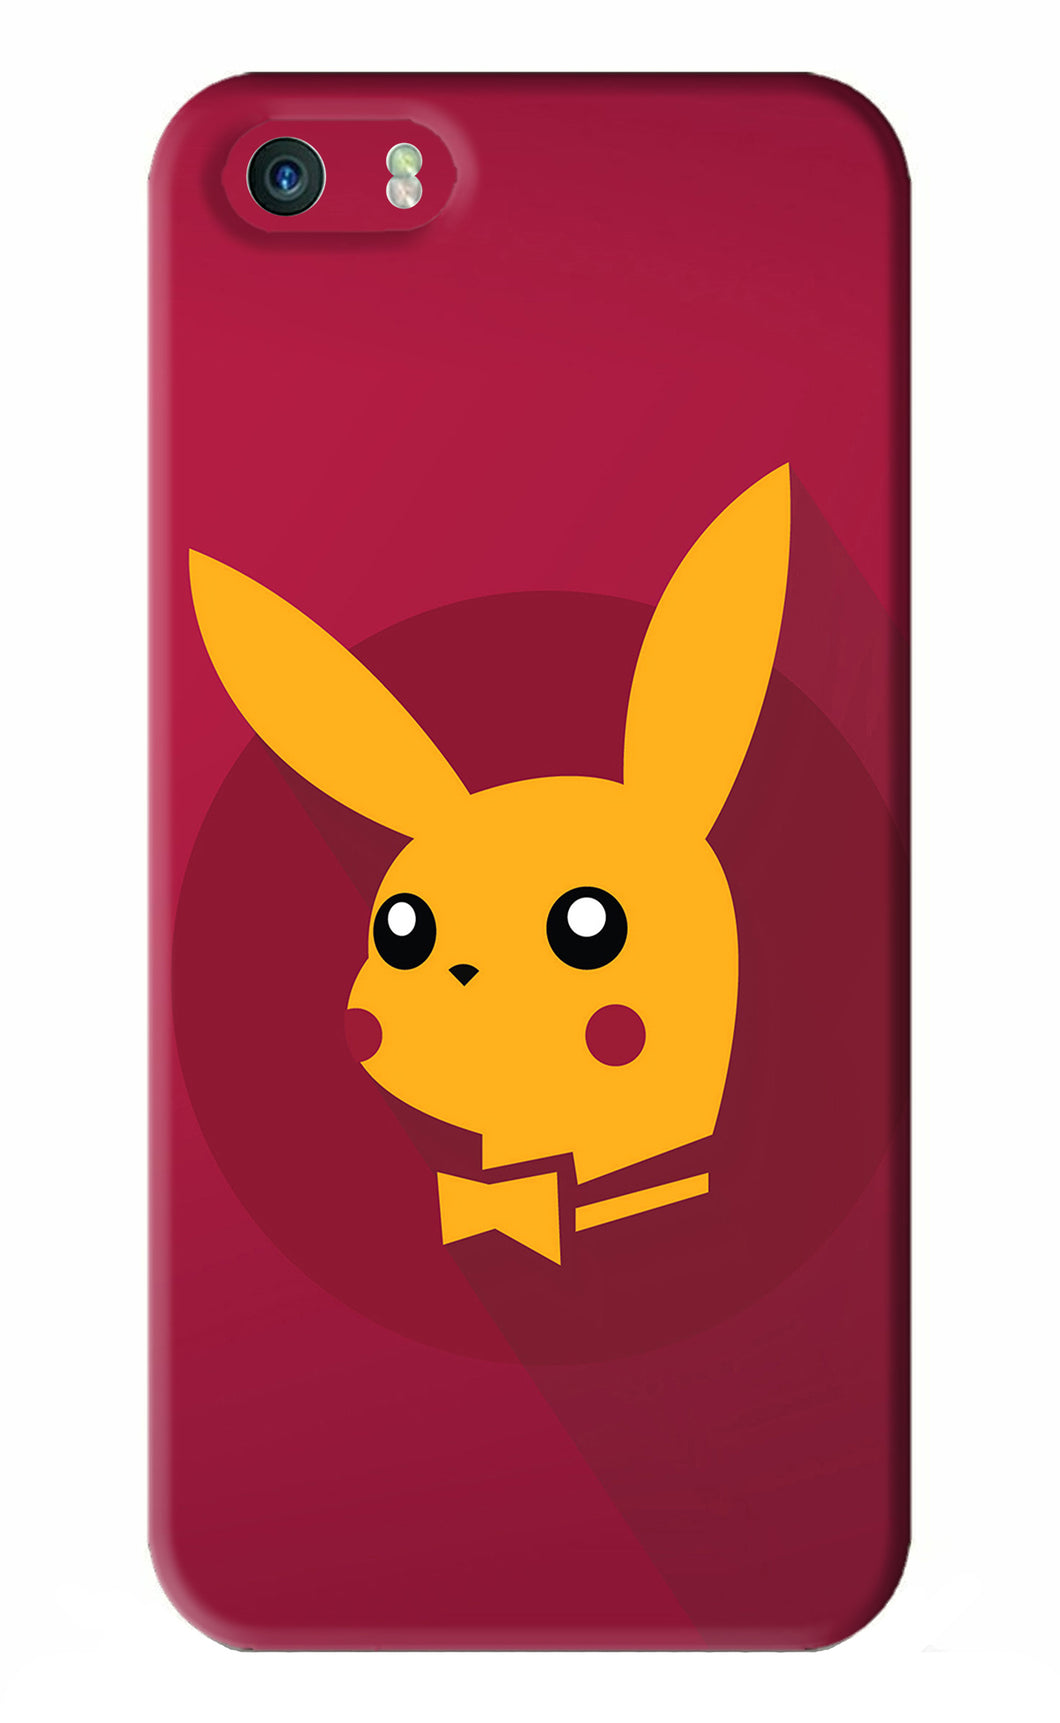 Pikachu iPhone 5S Back Skin Wrap